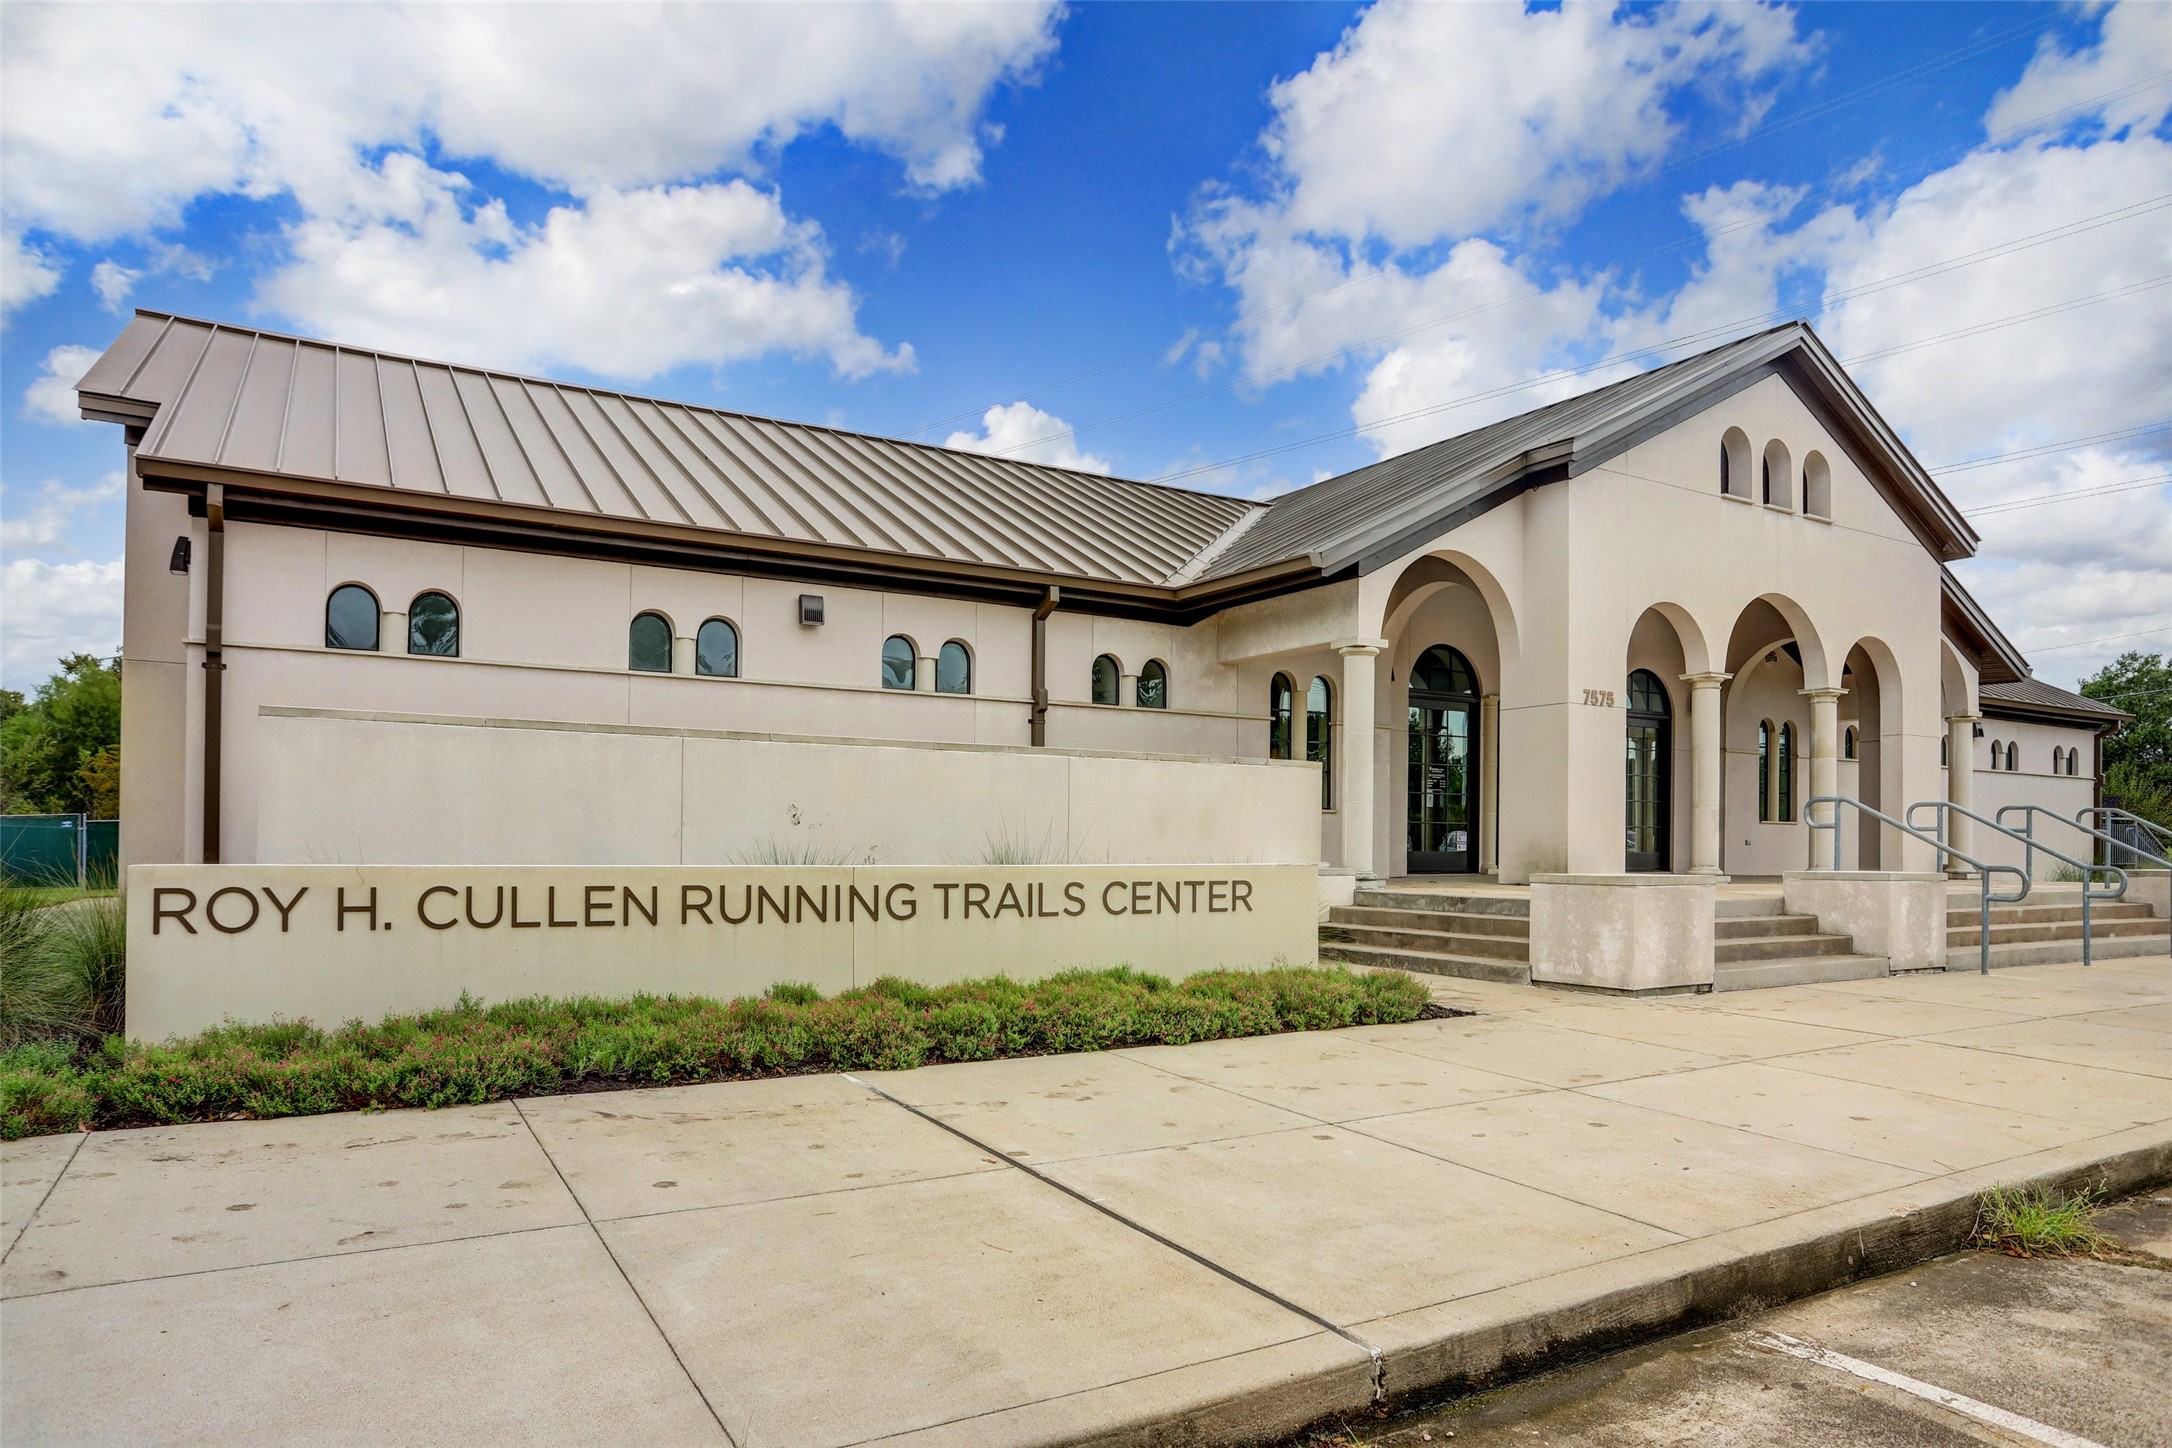 Roy H. Cullen Running Trails Center